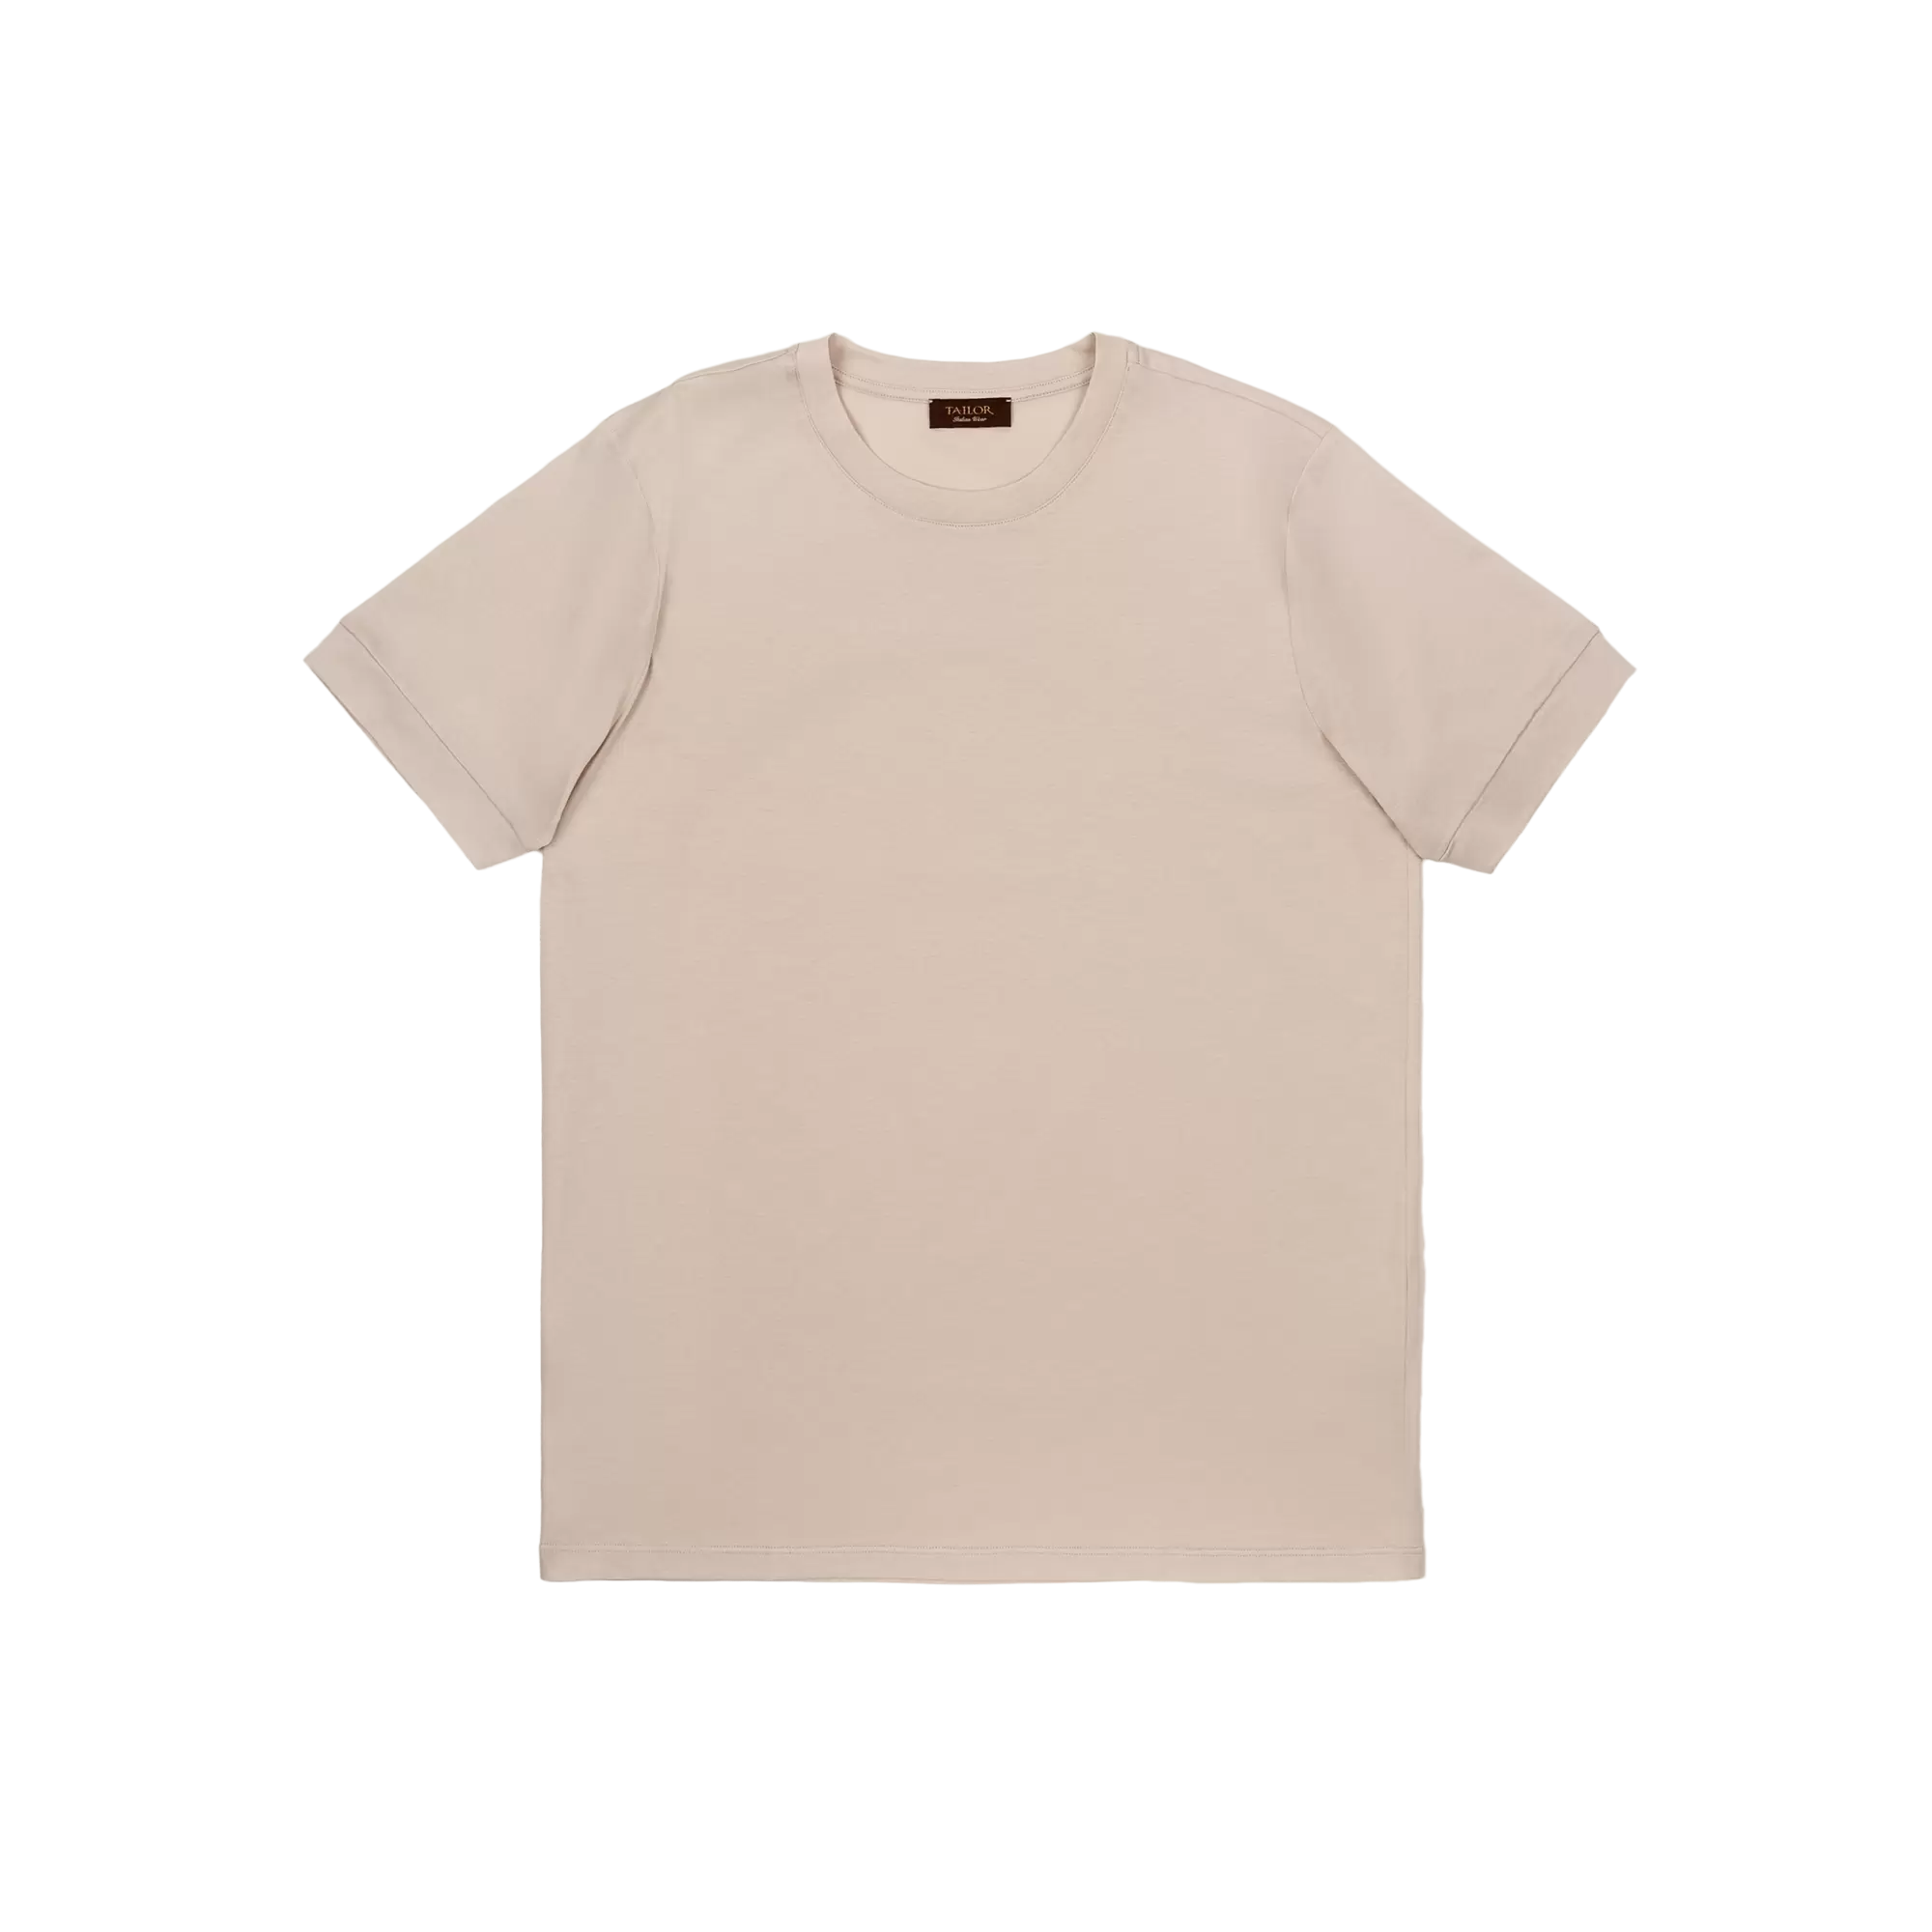 https://www.tailoritalianwear.com/media/amasty/webp/catalog/product/cache/ad40f66addf1e21d90c87b4425d4d5ca/m/e/men_s-beige-cotton-t-shirt-tailor-italian-wear-spring-summer-collection-2022-product-photo_copy_png.webp